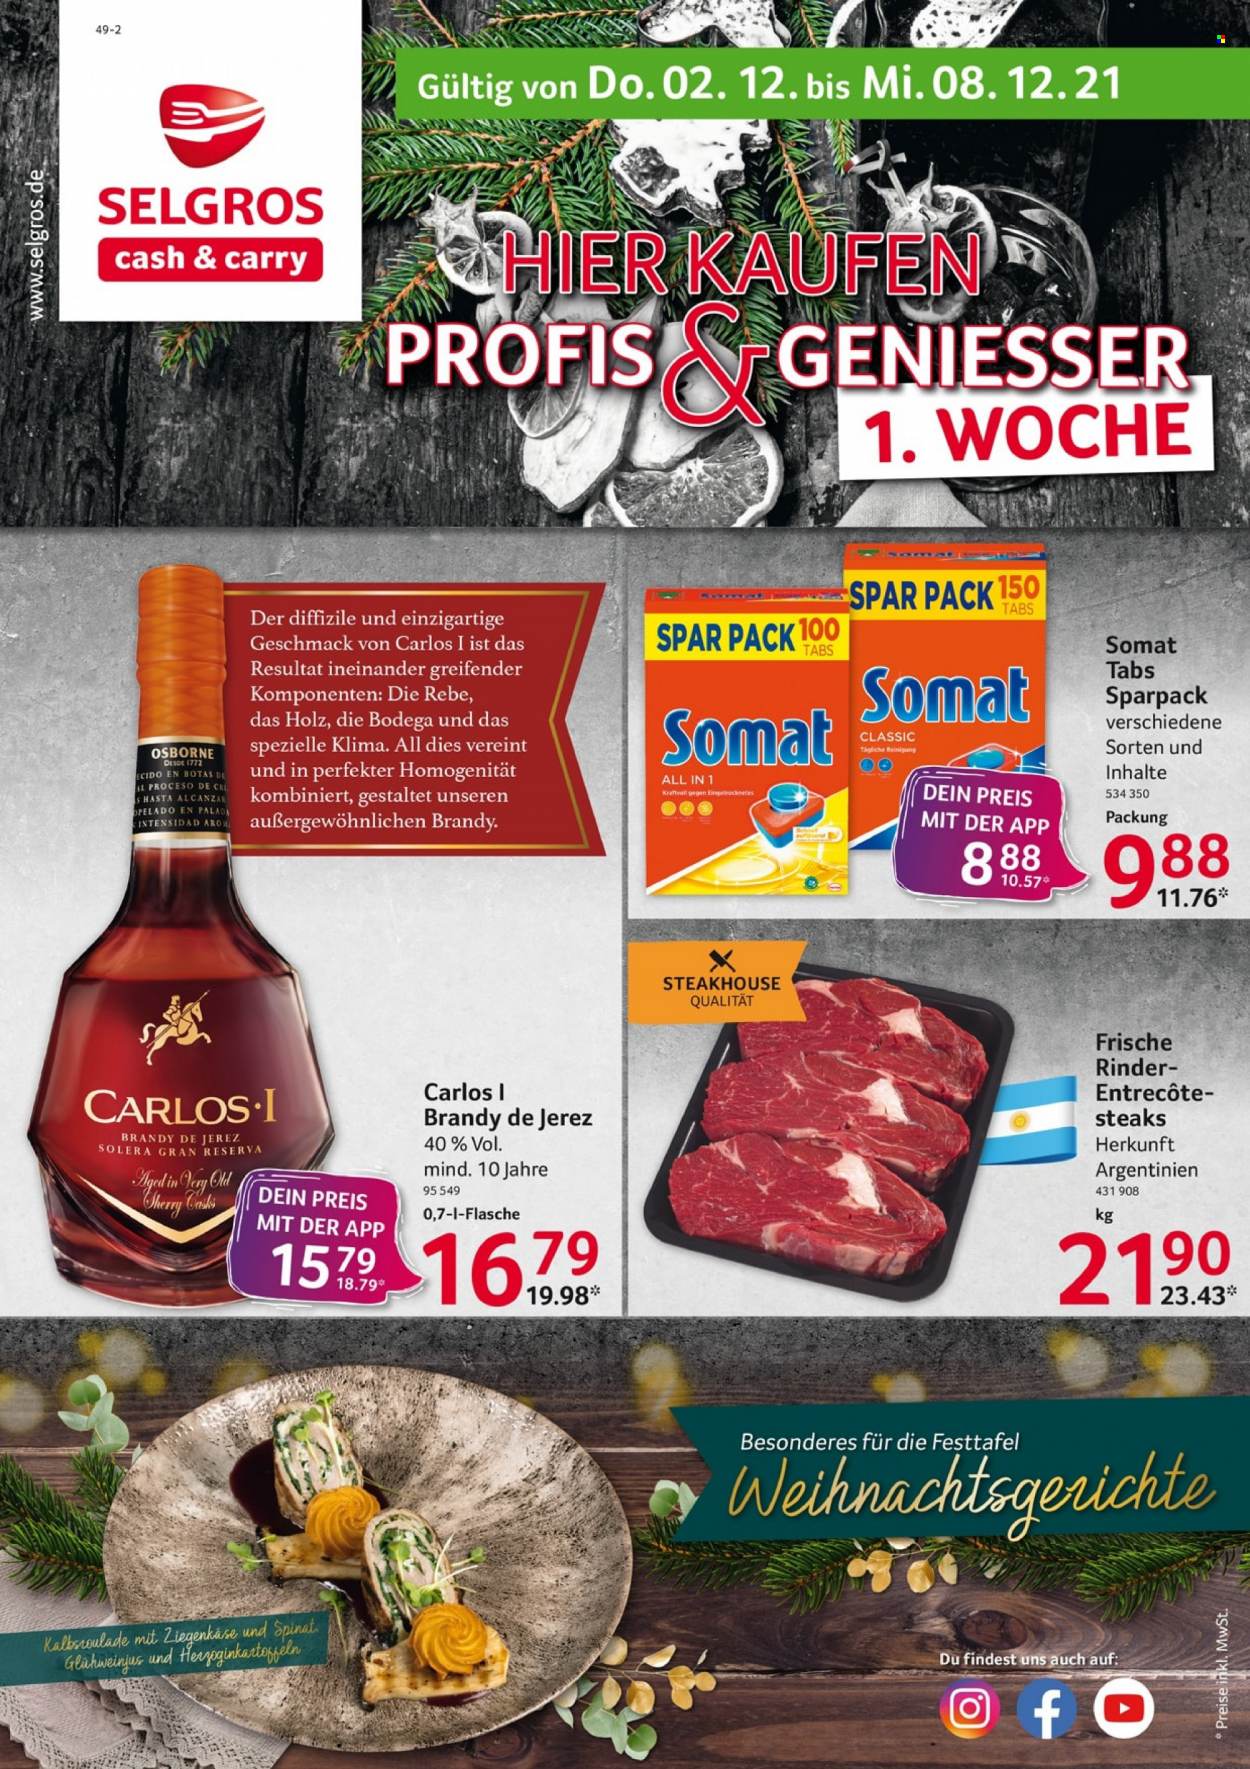 thumbnail - Prospekte Selgros - 2.12.2021 - 8.12.2021 - Produkte in Aktion - Alkohol, Entrecôte, Käse, Ziegenkäse, Somat. Seite 1.